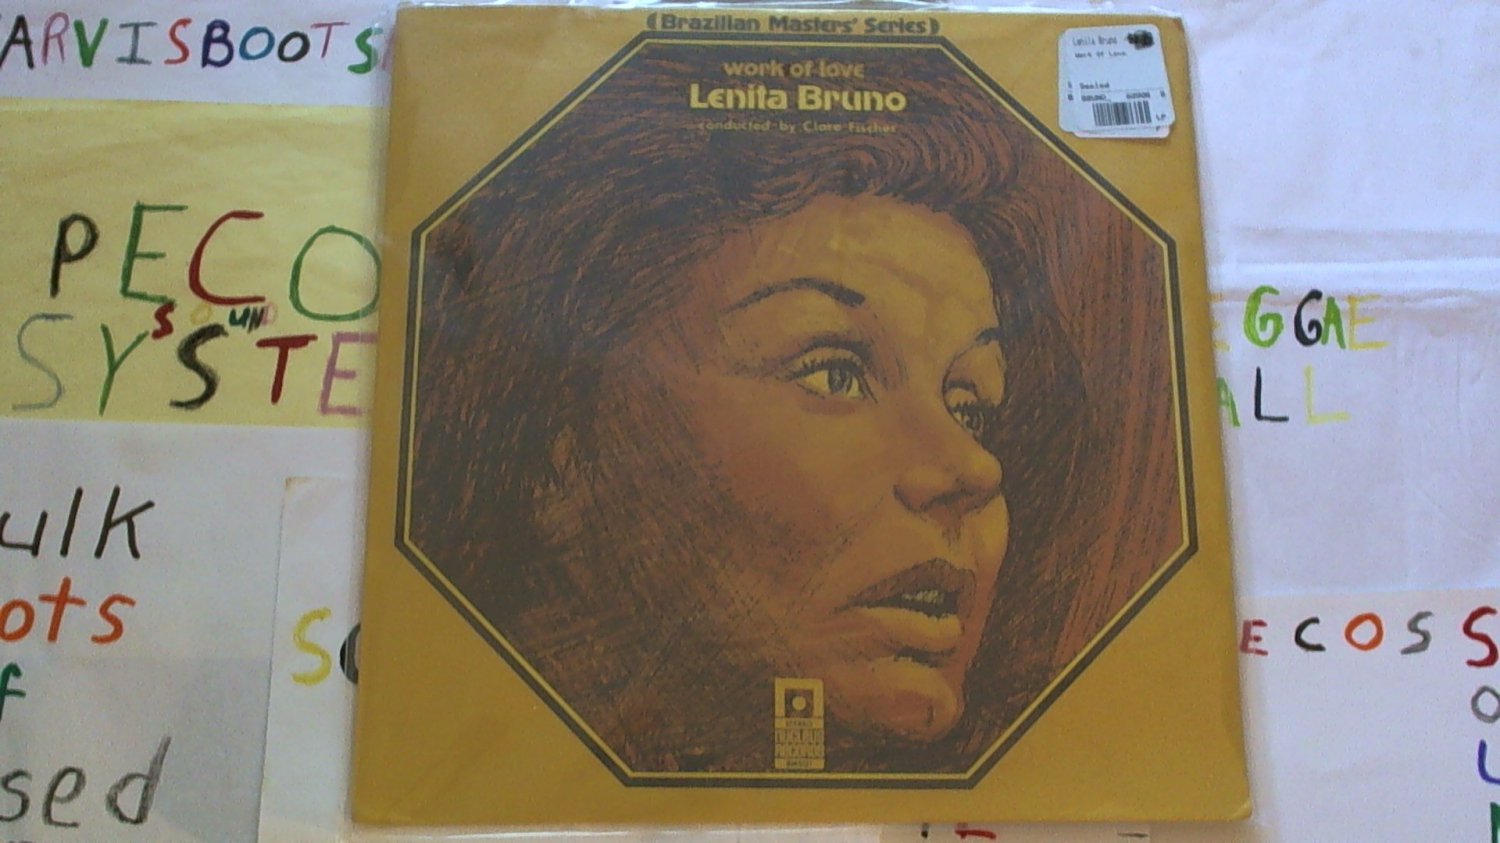 artist: Lenita Bruno title: Work Of Love label: Brazilian Master's Series (Sealed) LP